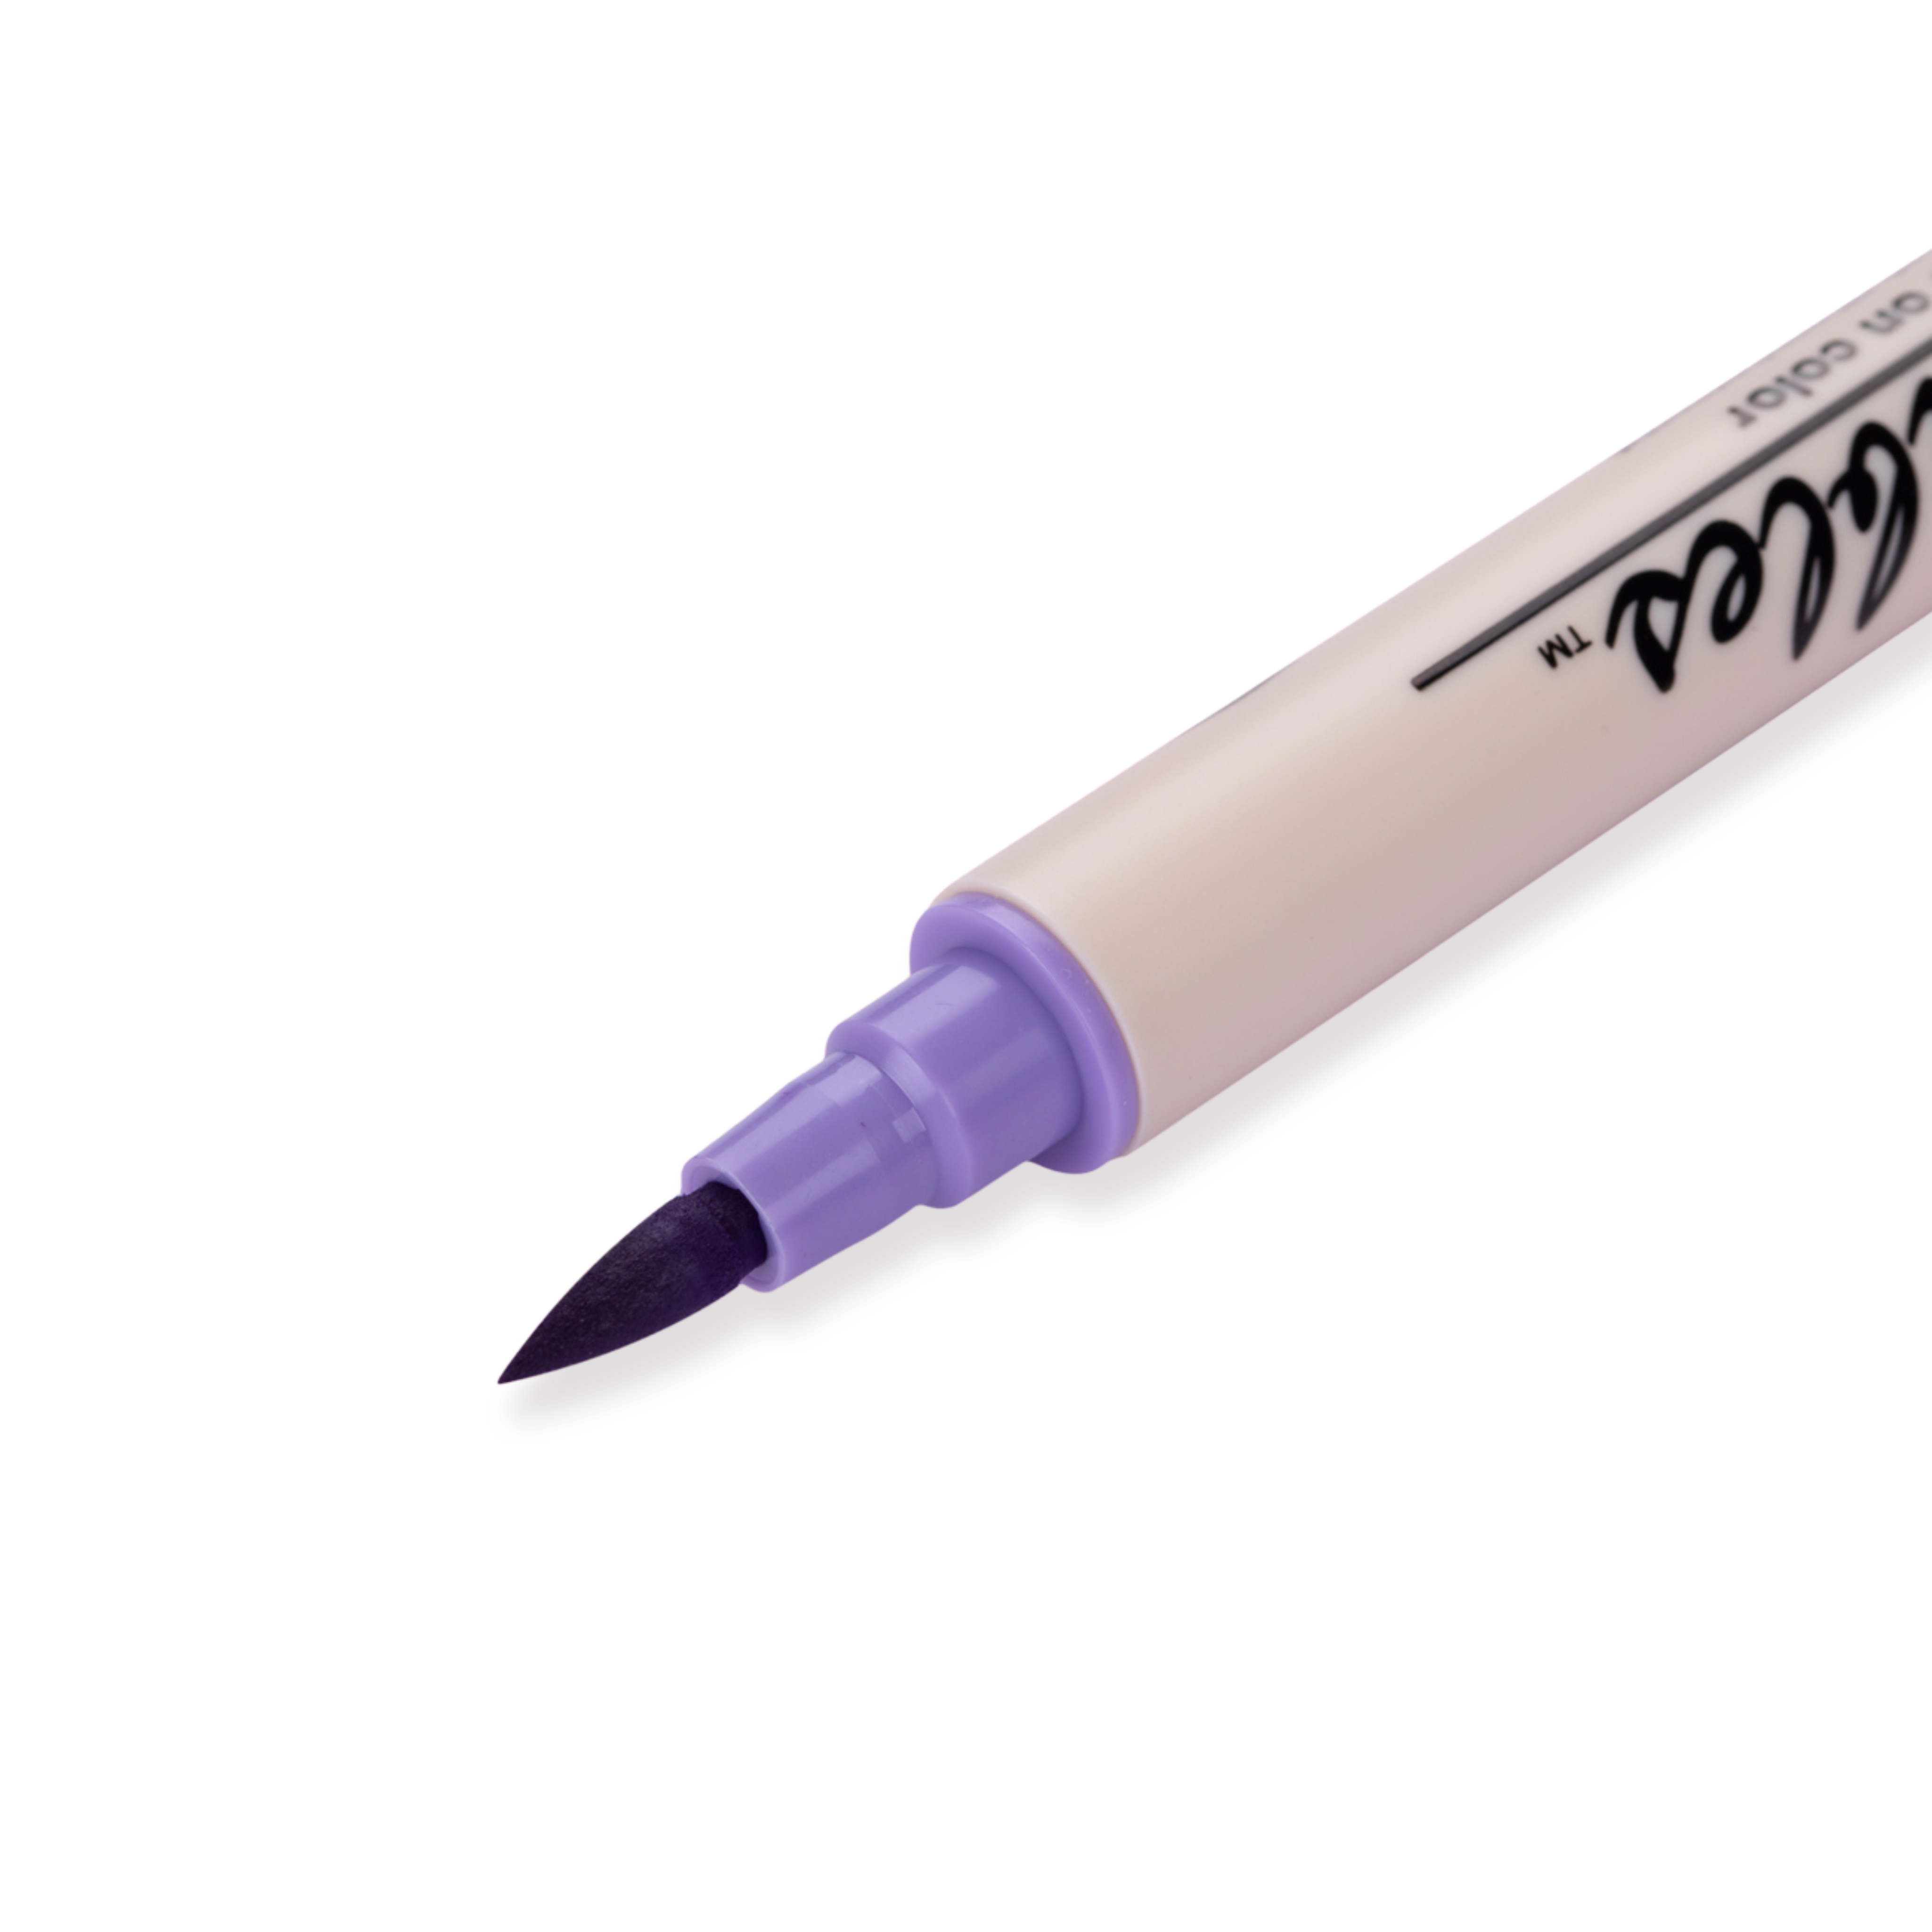 Kuretake Zig Brushables Brush Pen - Violeta puro 080